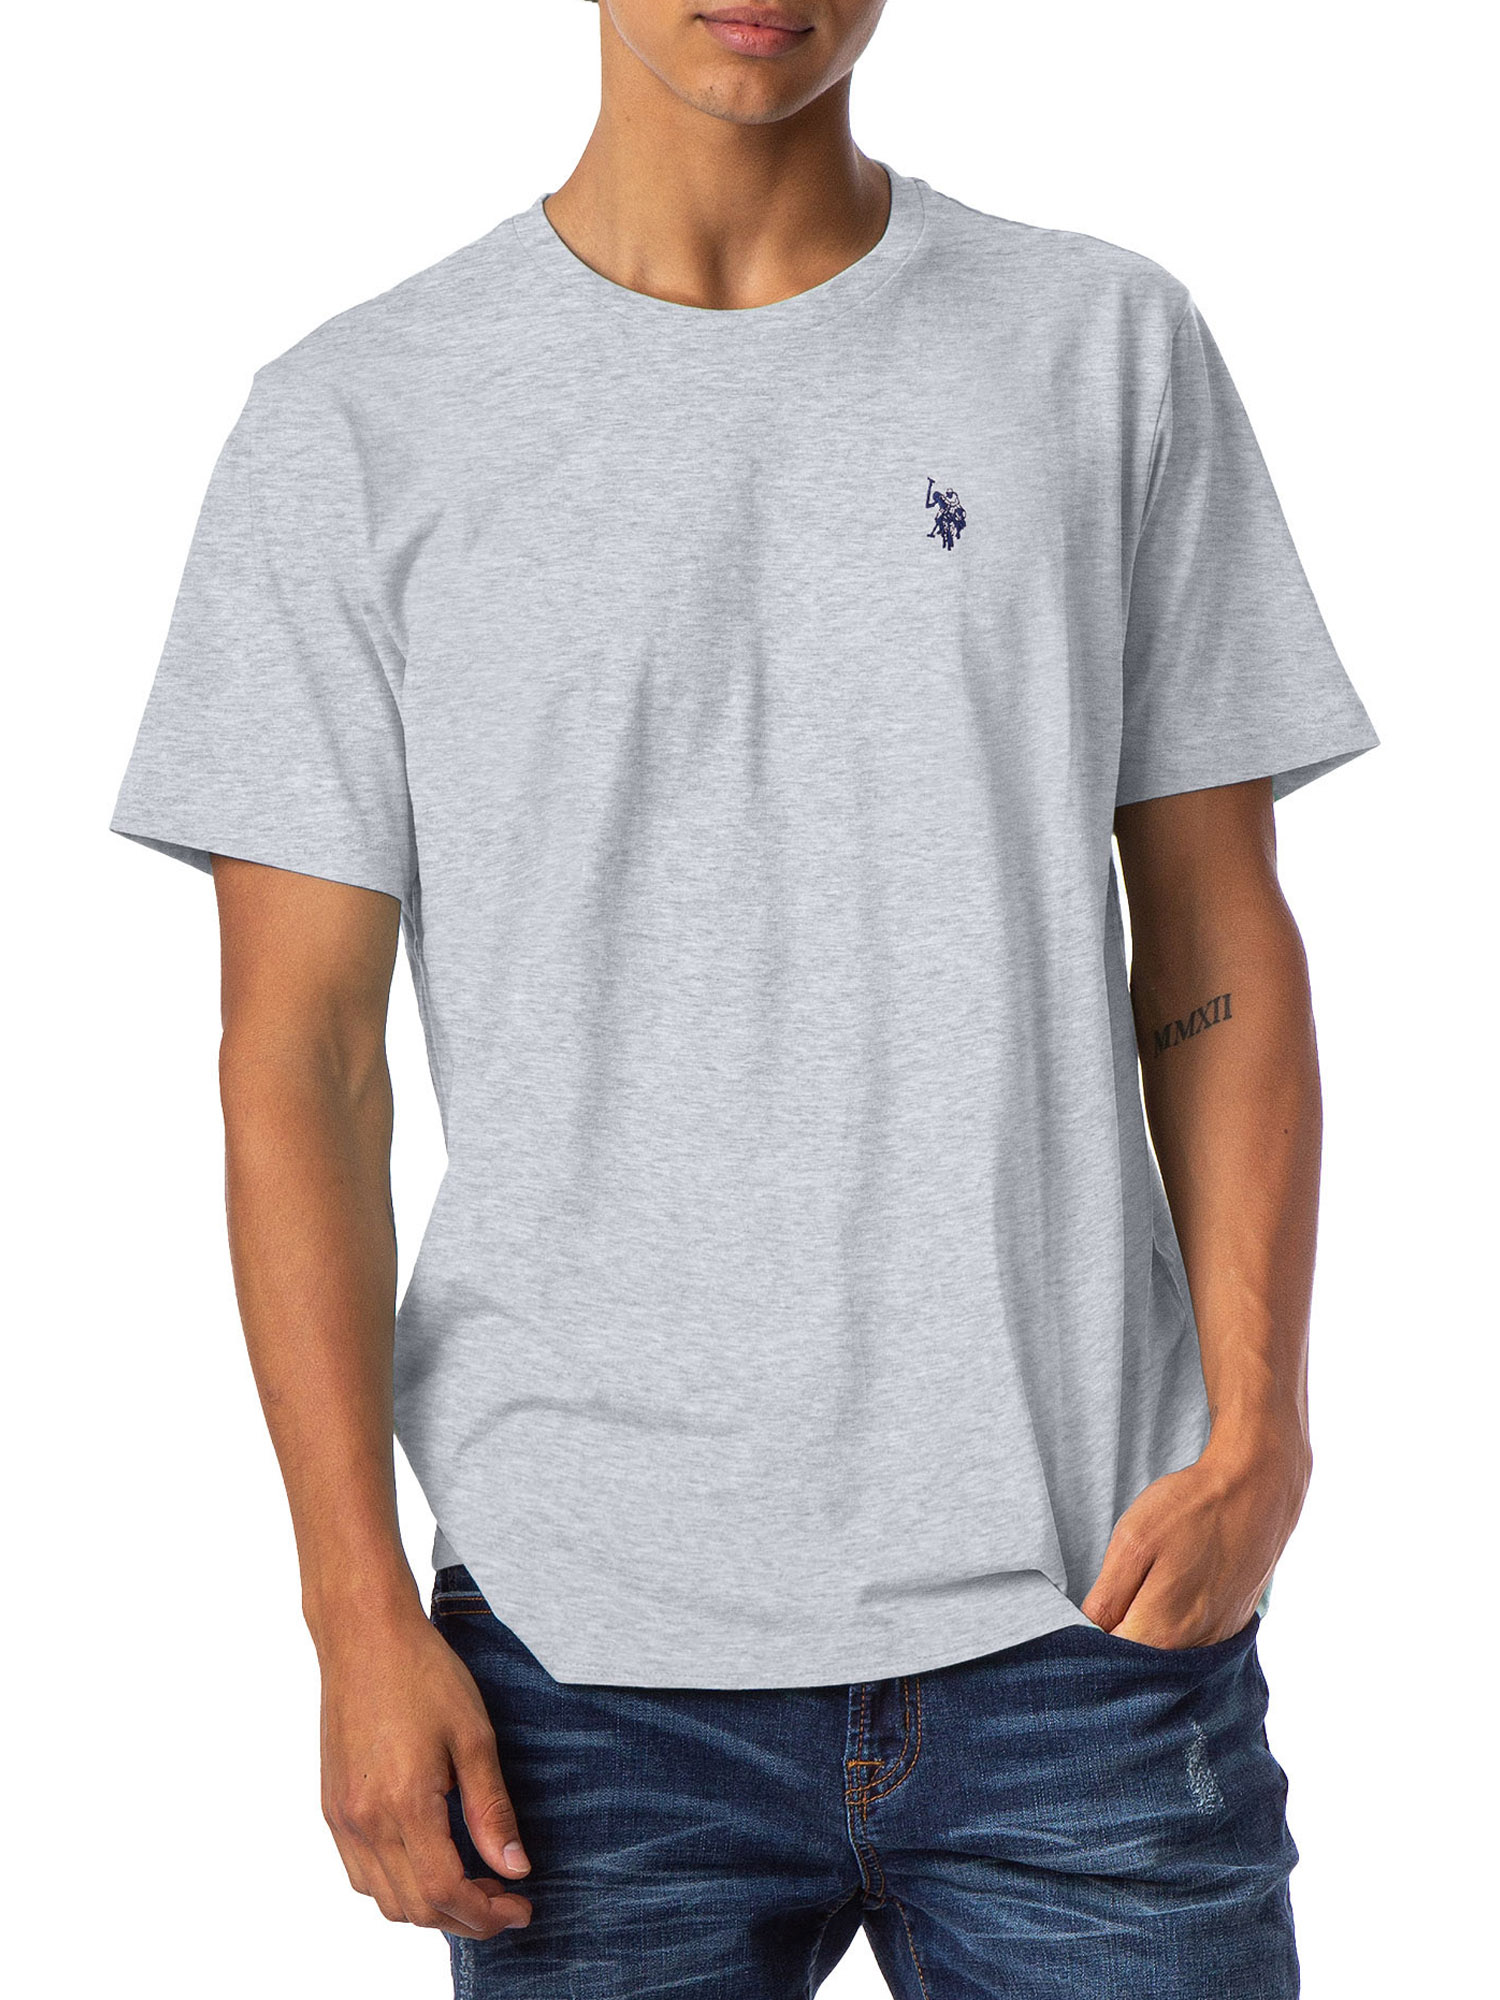 U.S. Polo Assn. Men's Crew Neck T-Shirt - image 1 of 3